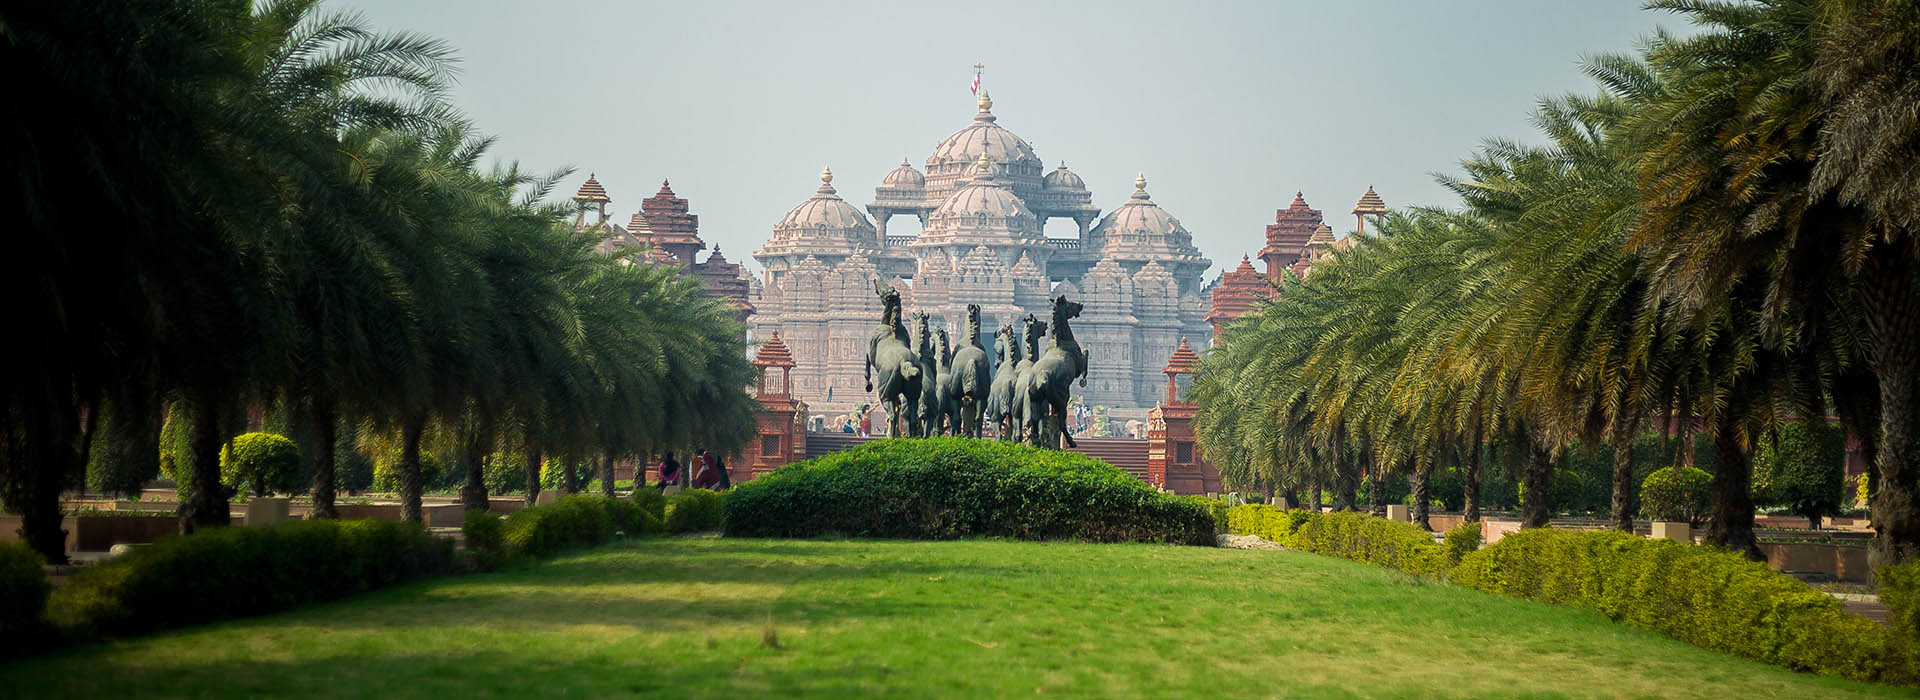 Swaminarayan Akshardham: Cultural Gardens